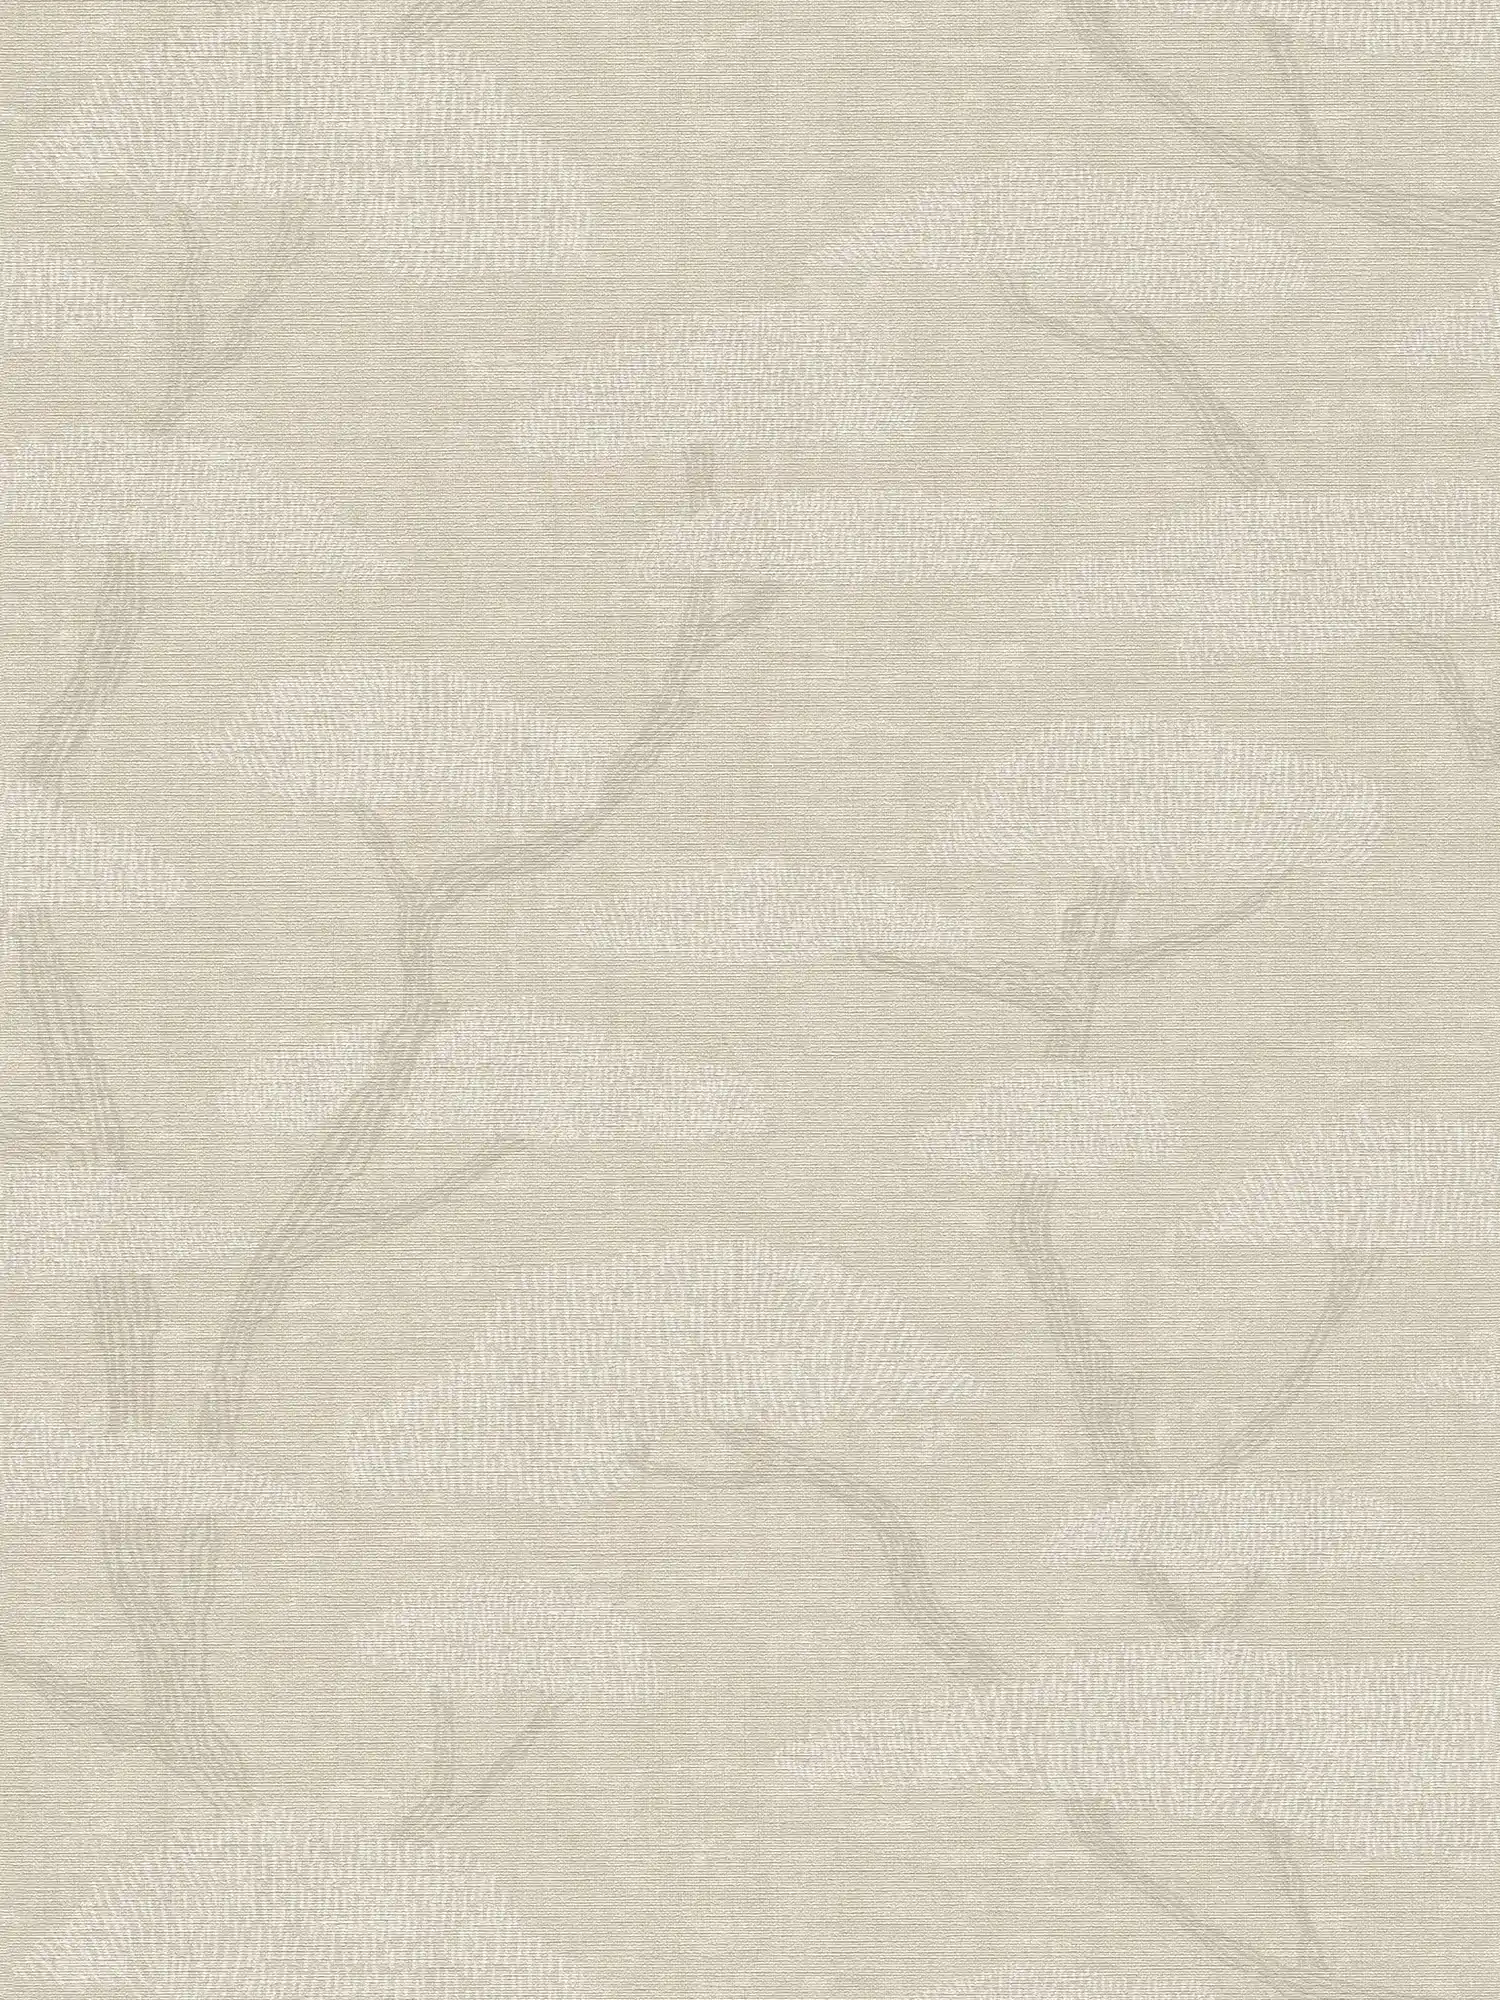             Non-woven wallpaper pine forest in retro look - beige
        